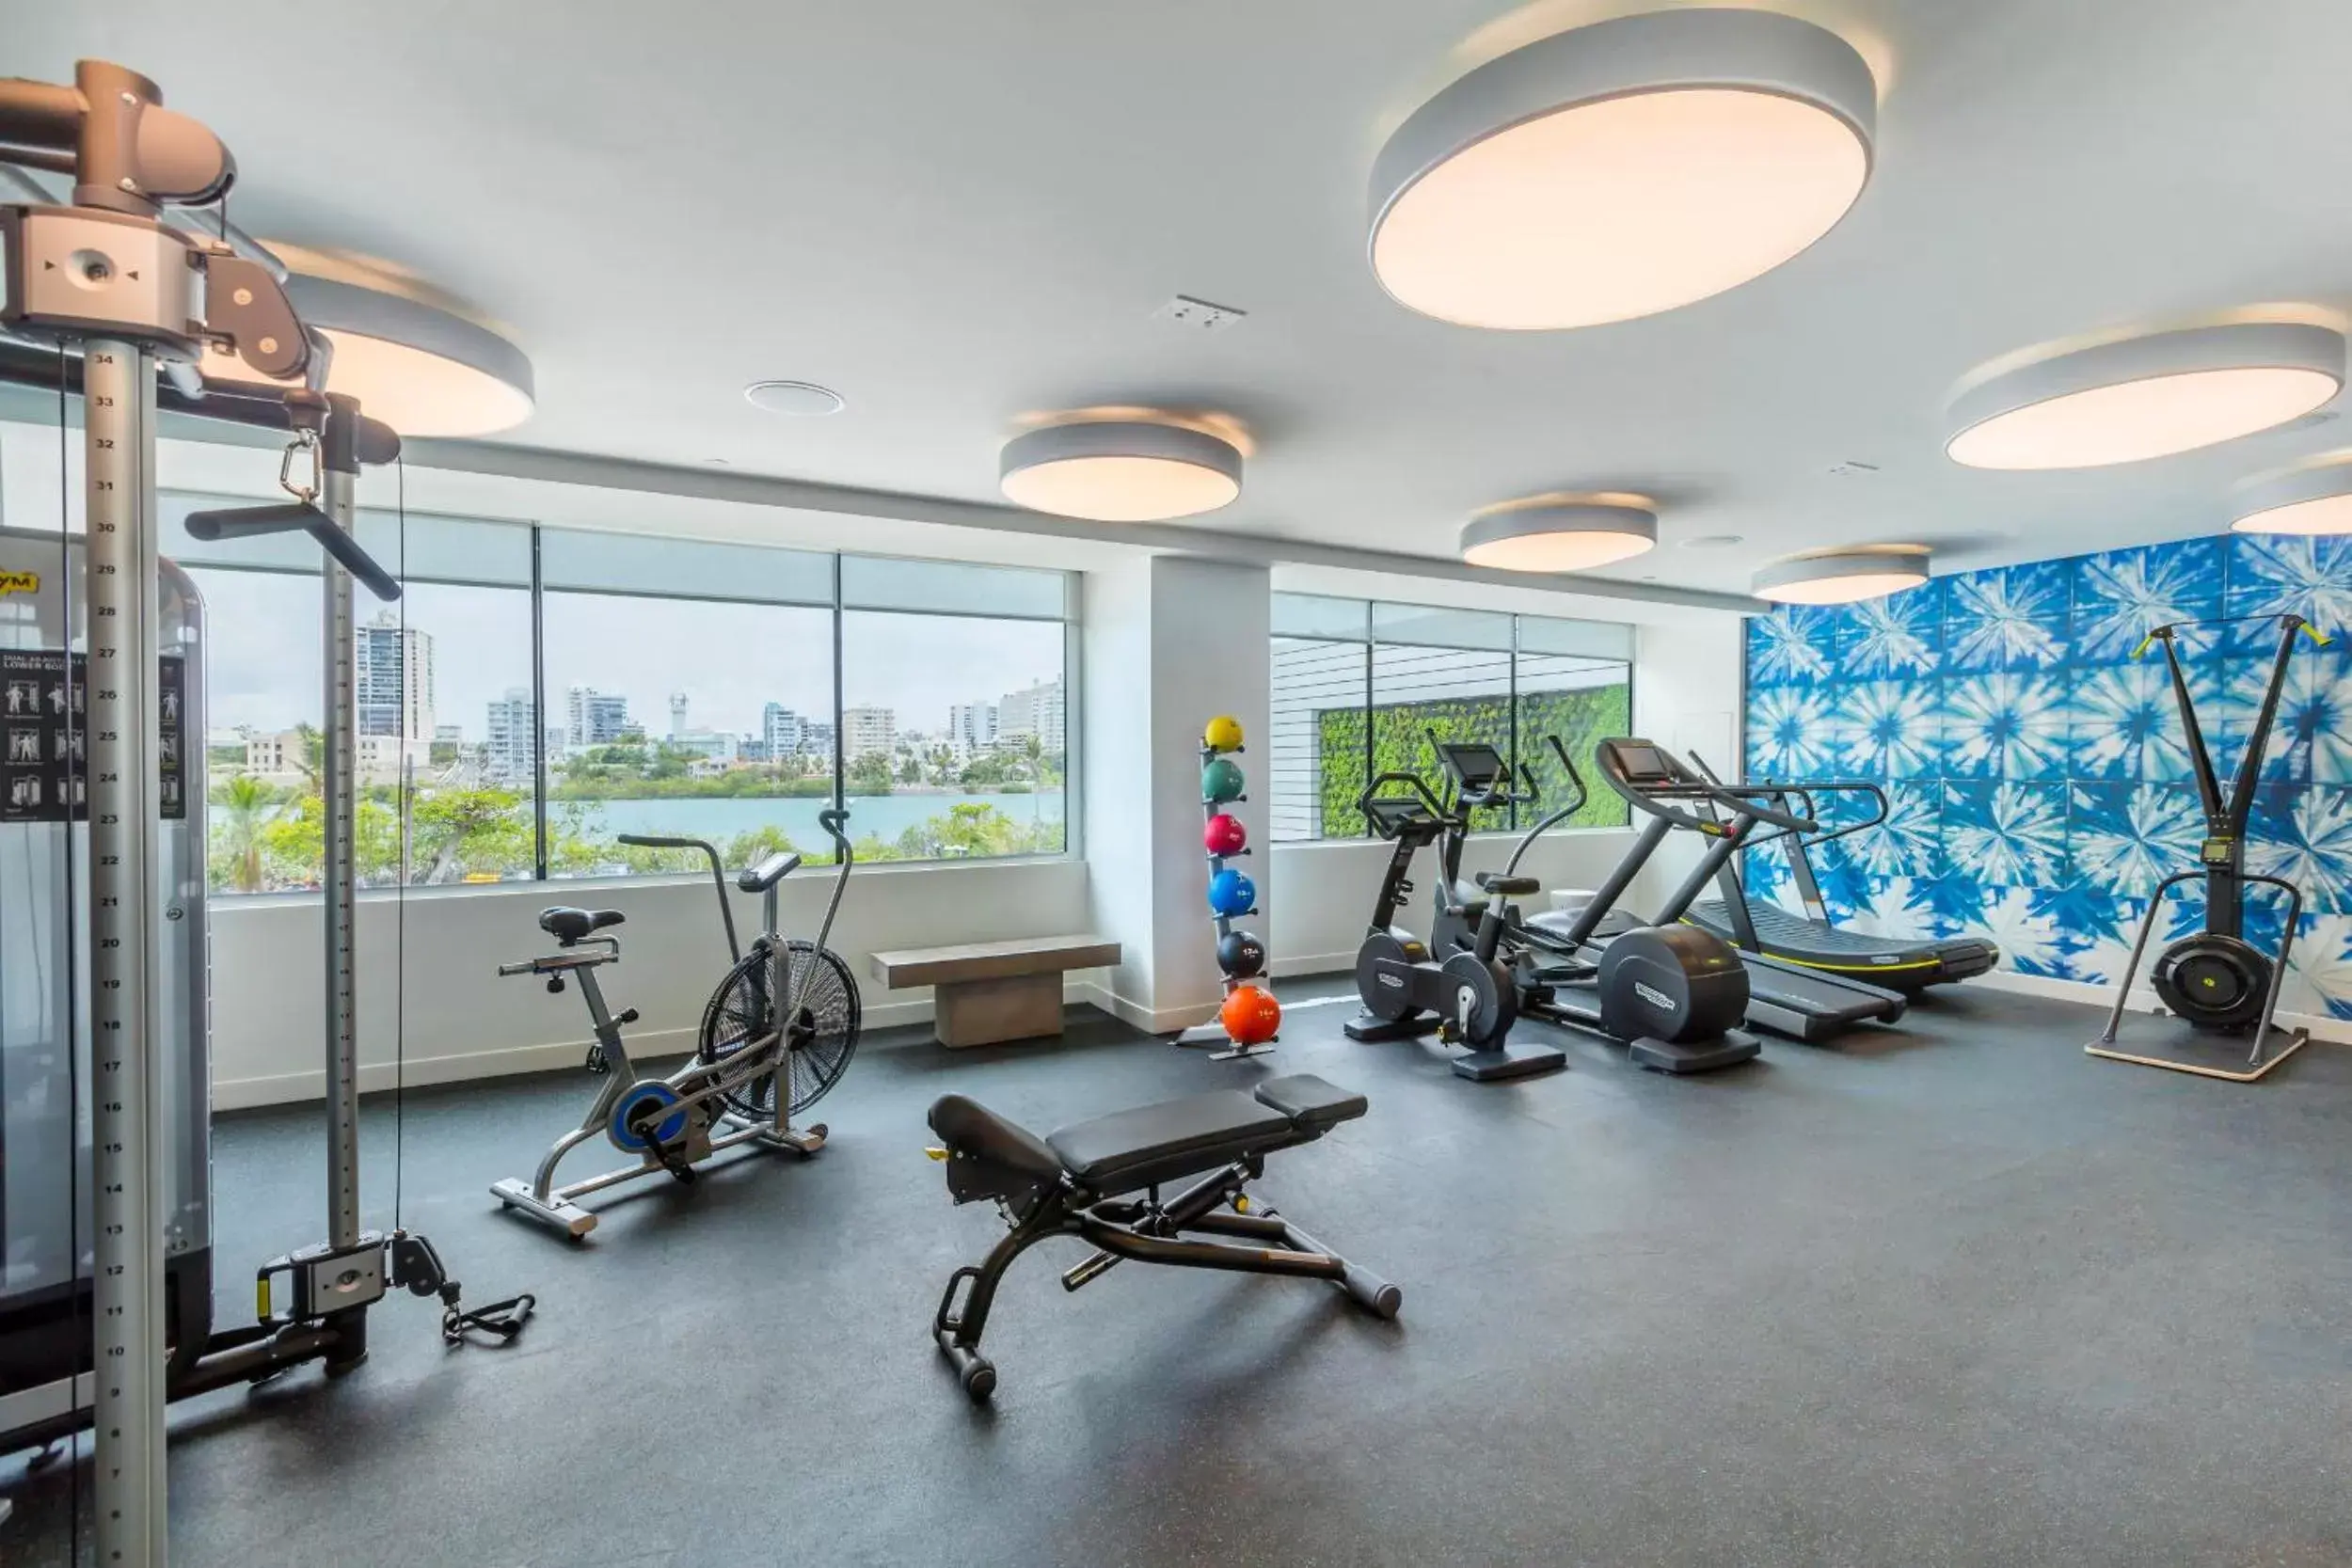 Fitness centre/facilities, Fitness Center/Facilities in Condado Ocean Club